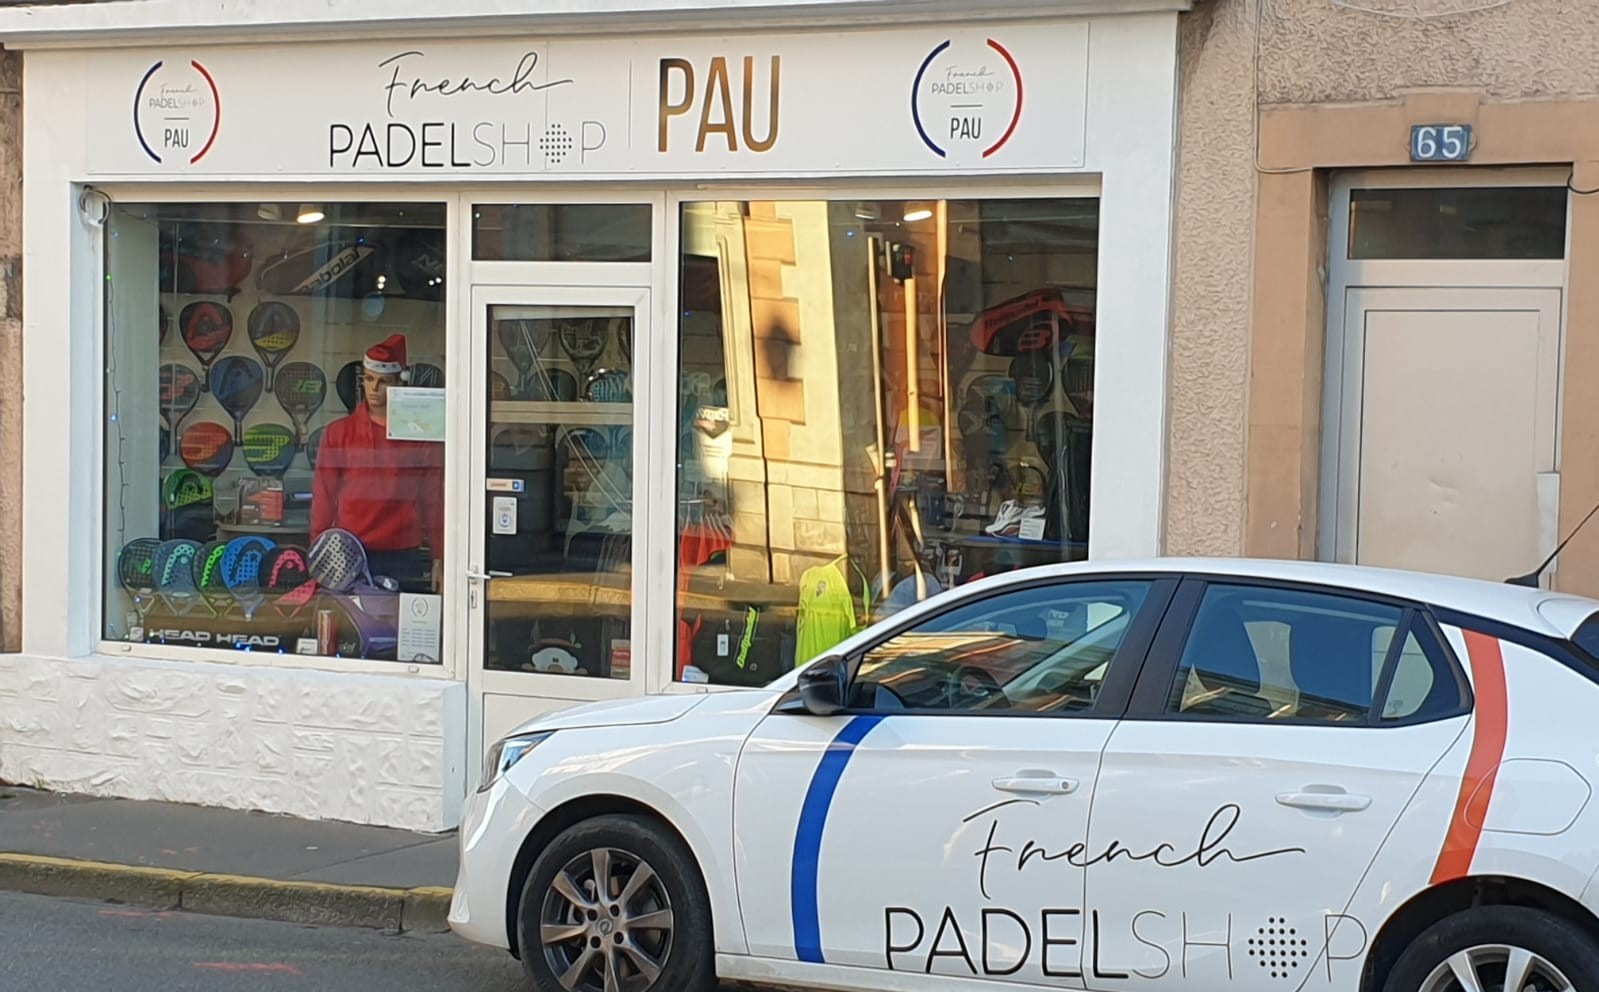 Local Pau French Padel shop shop